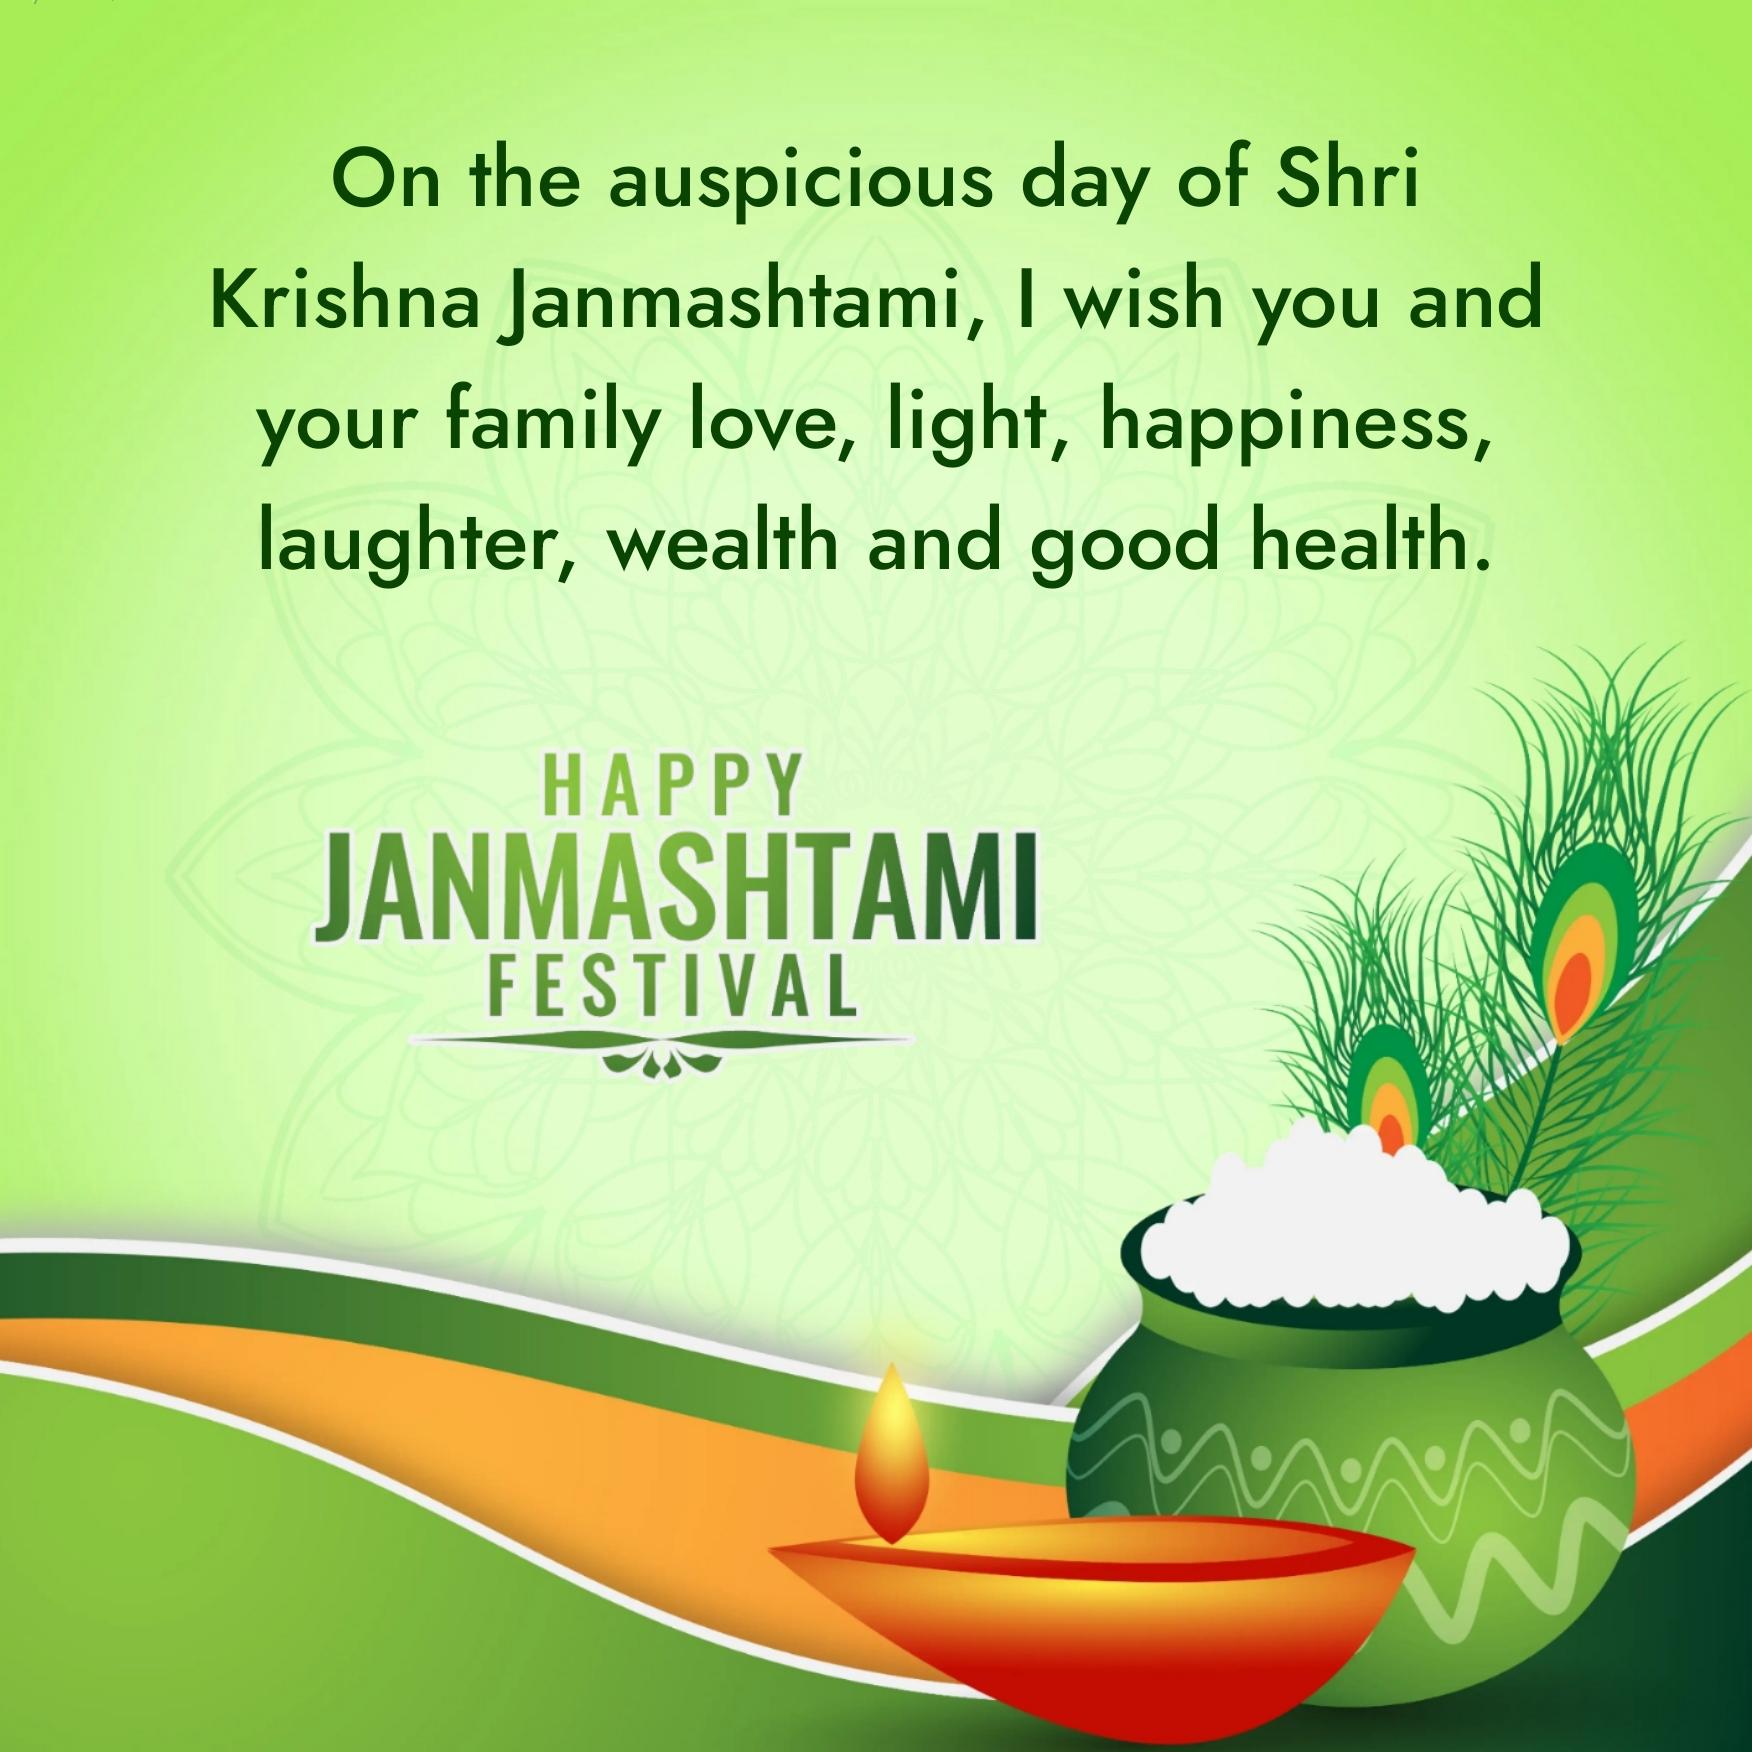 On the auspicious day of Shri Krishna Janmashtami I wish you